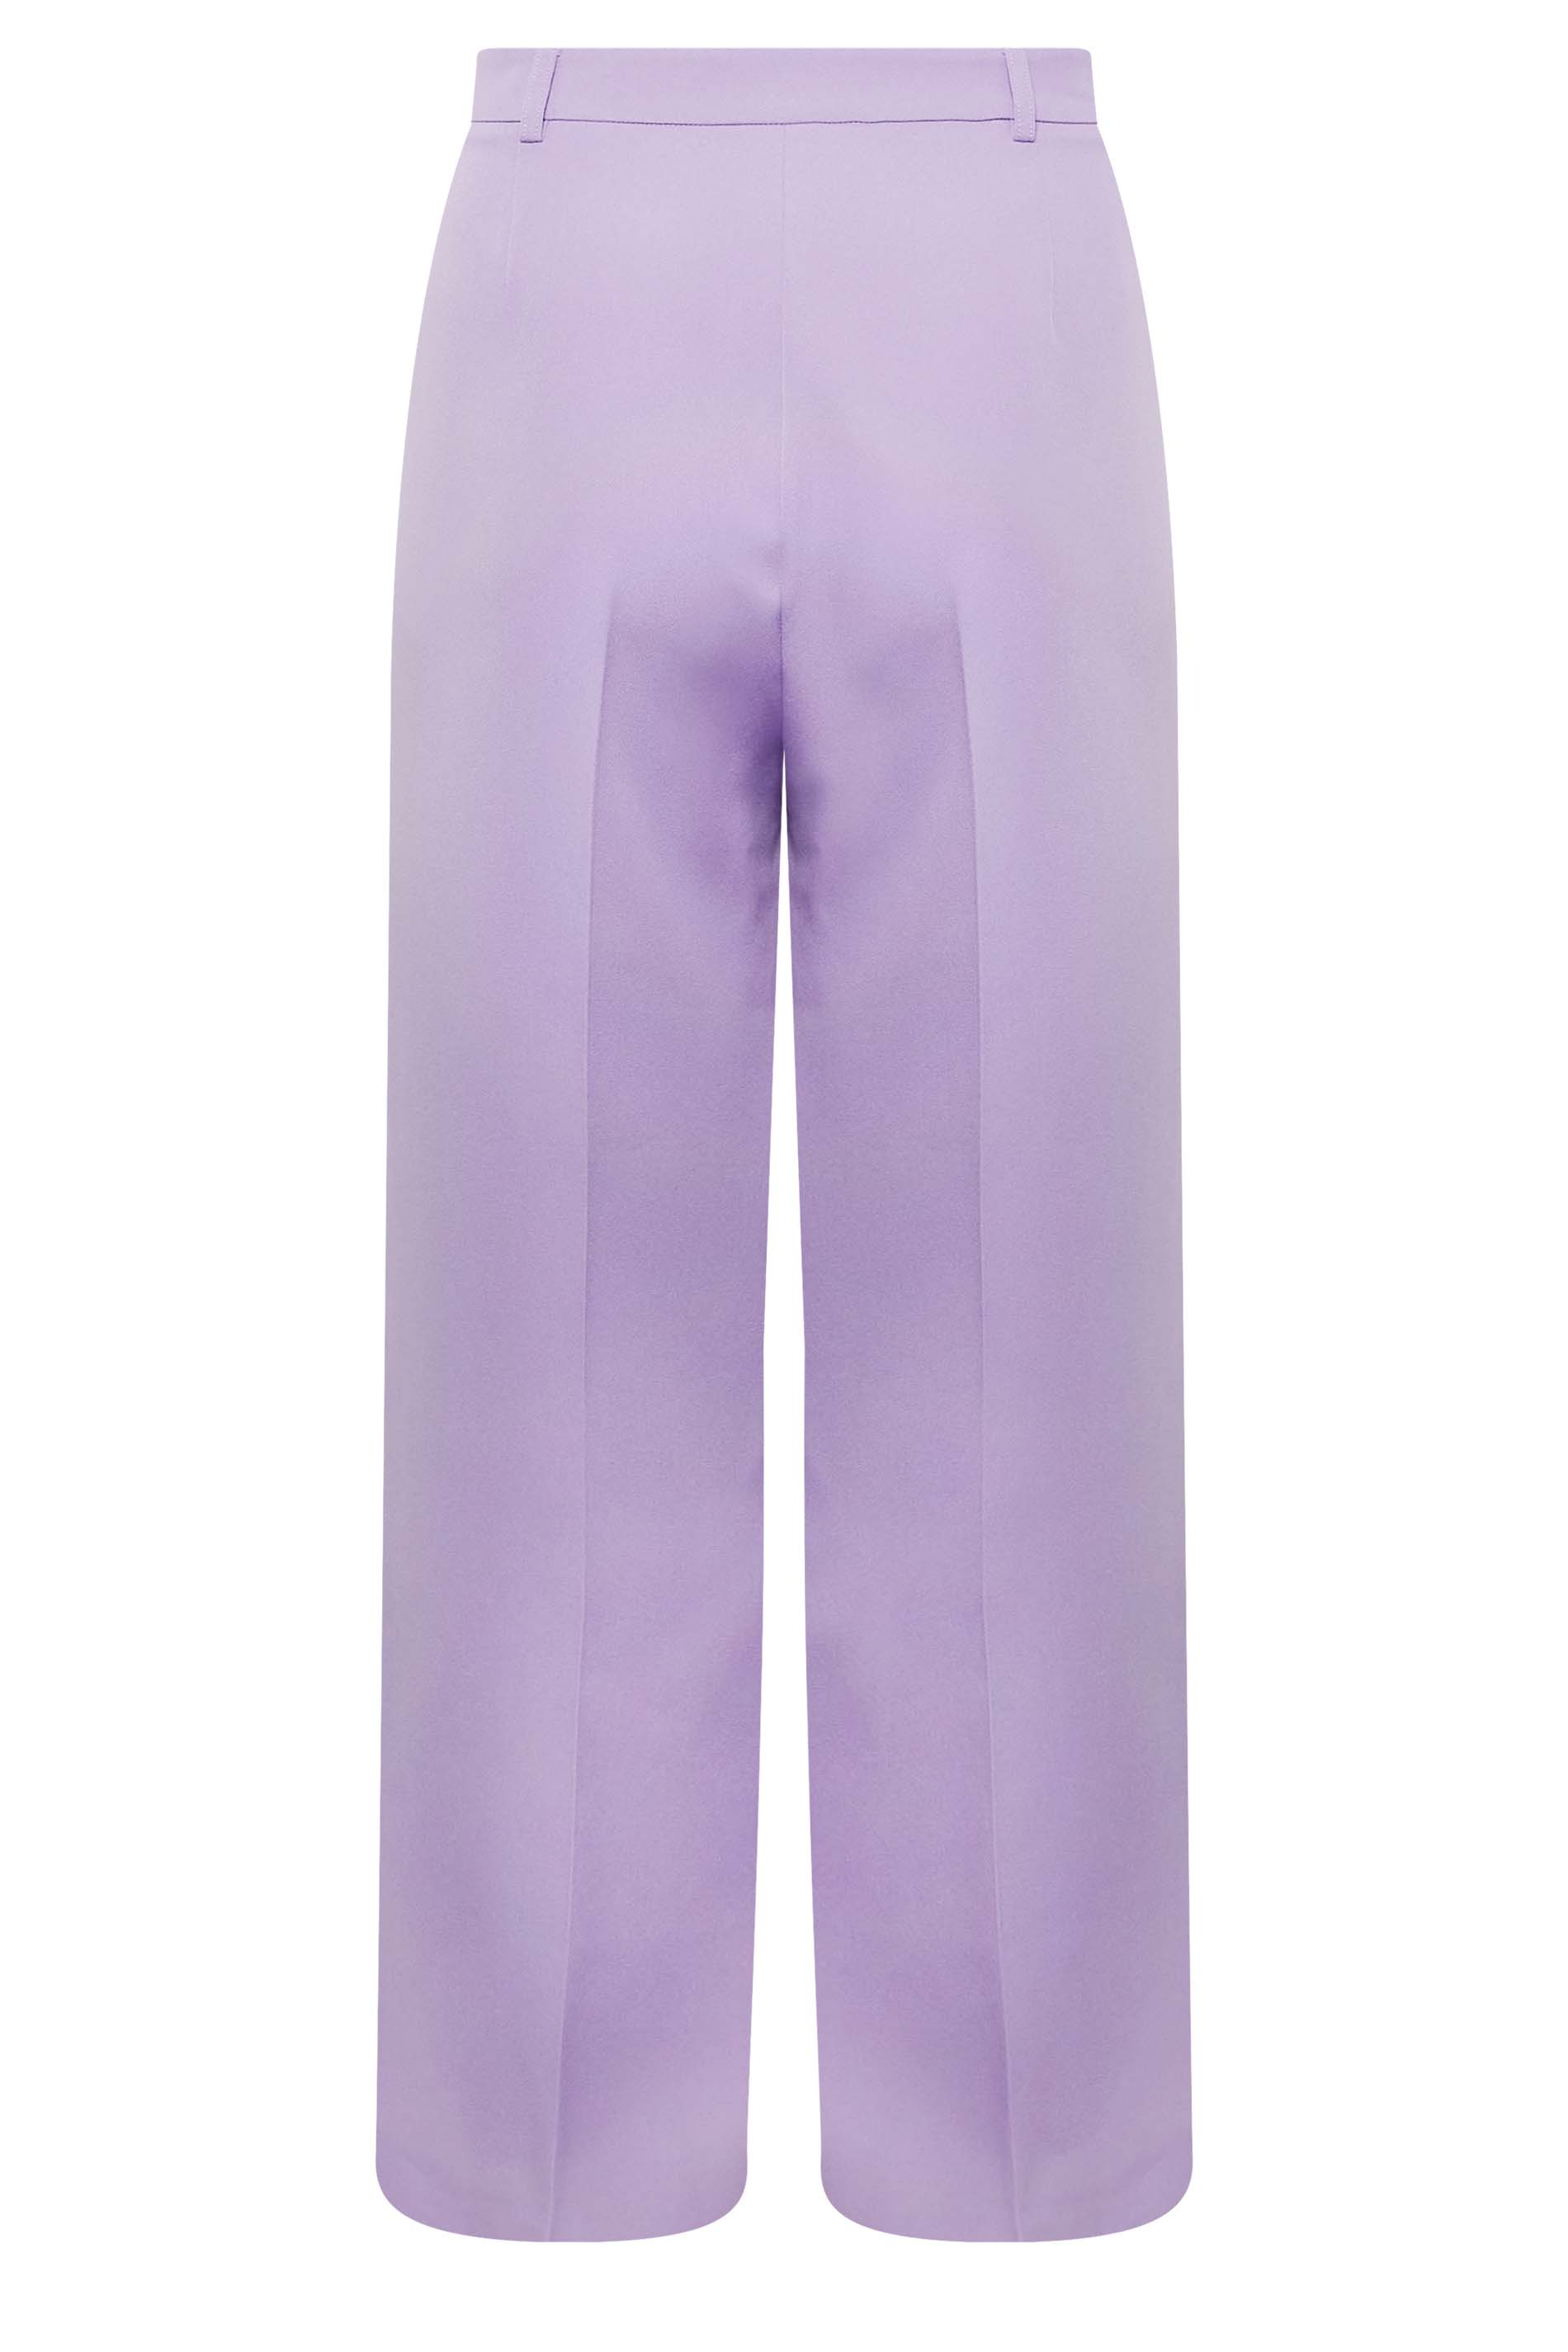 Next Lipsy Purple Trousers Size 10 Brand New India  Ubuy